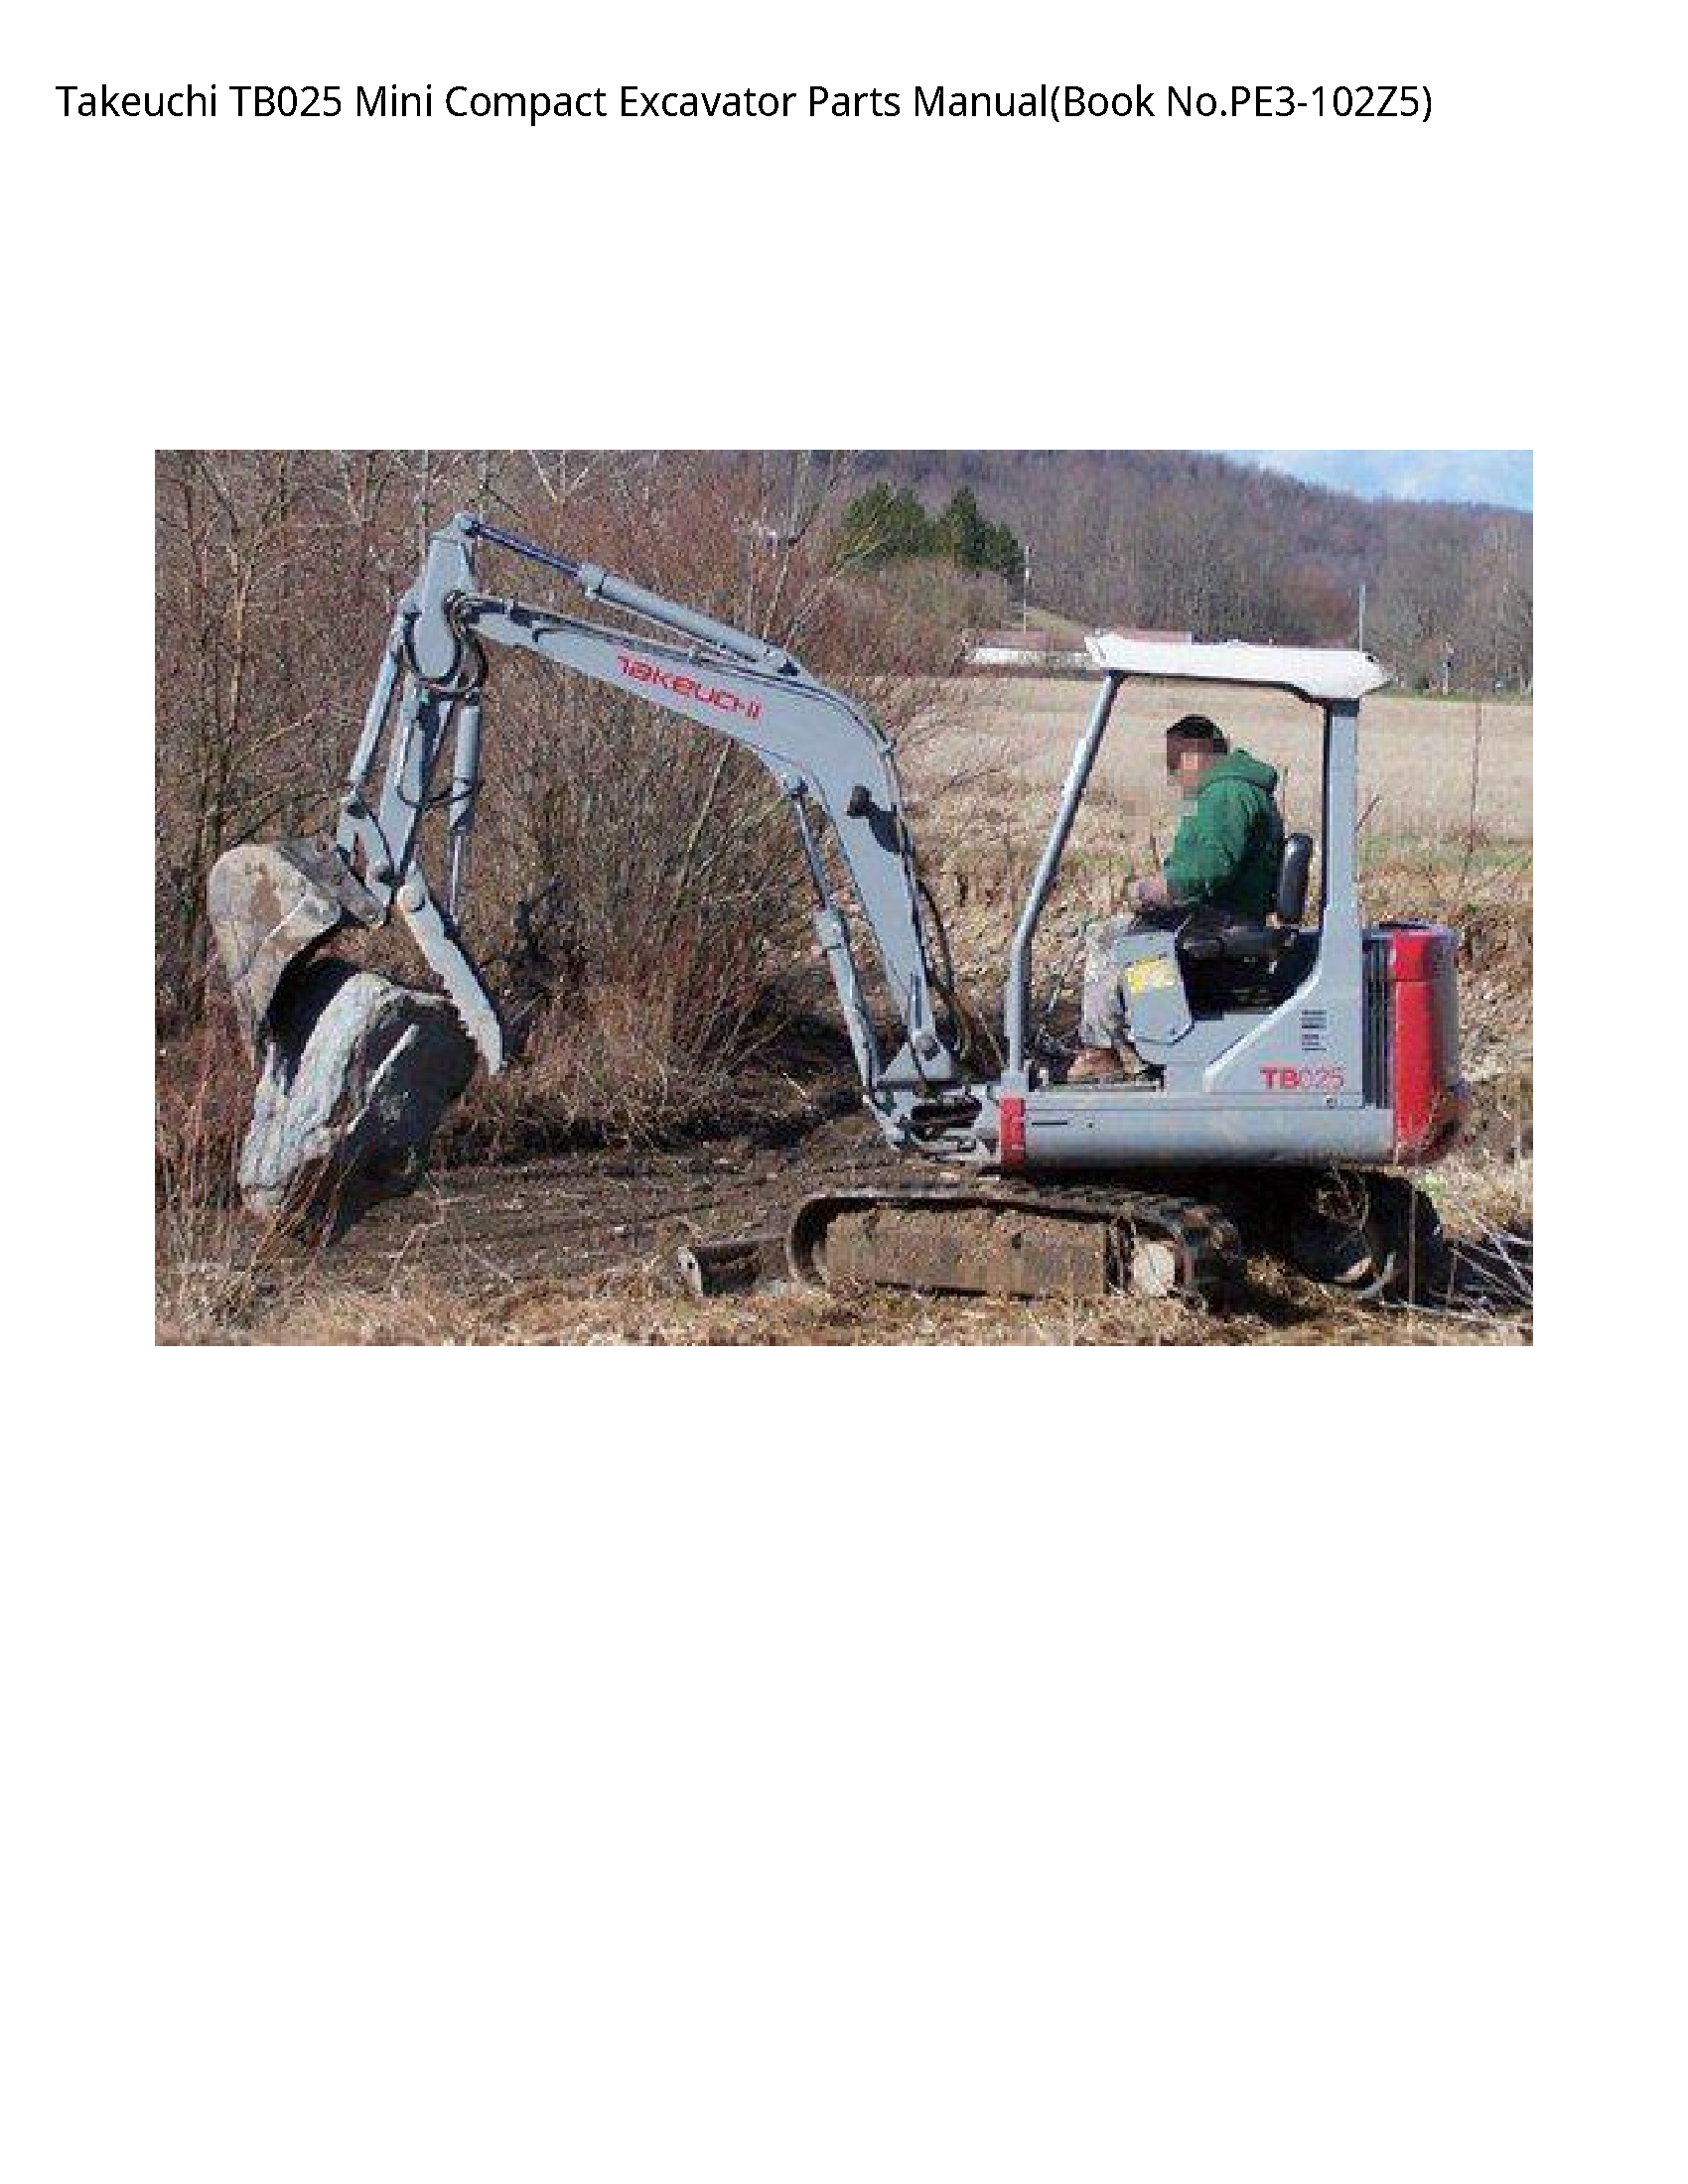 Takeuchi TB025 Mini Compact Excavator Parts manual